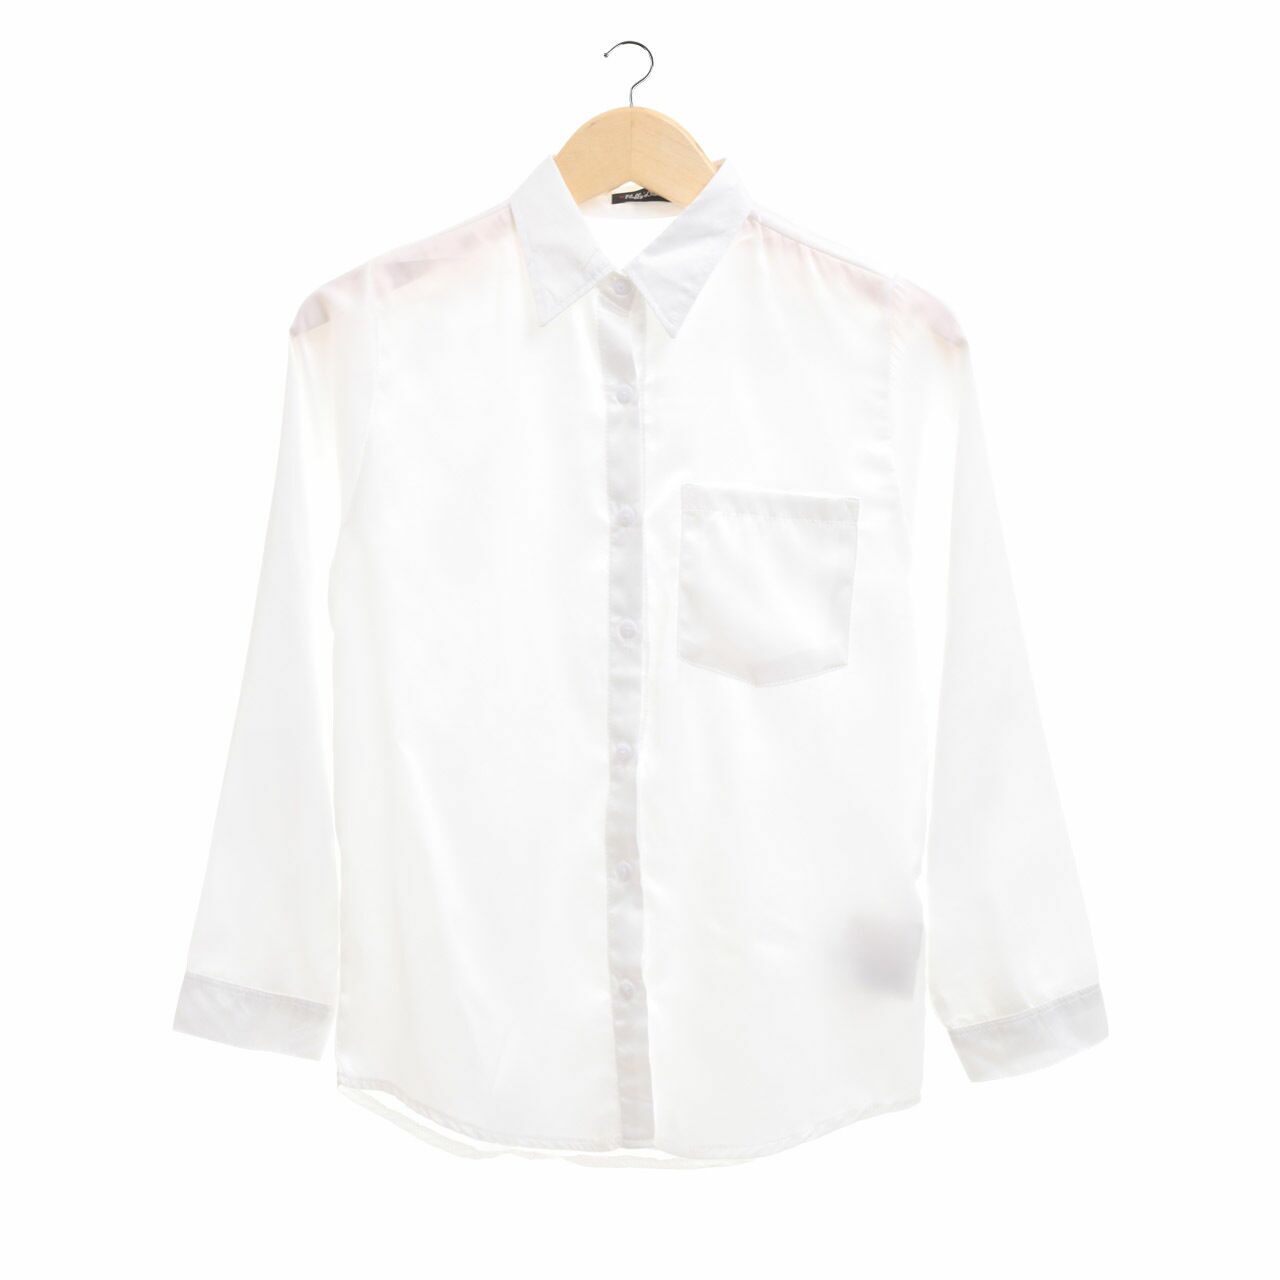 Pluffy's Choice White Shirt